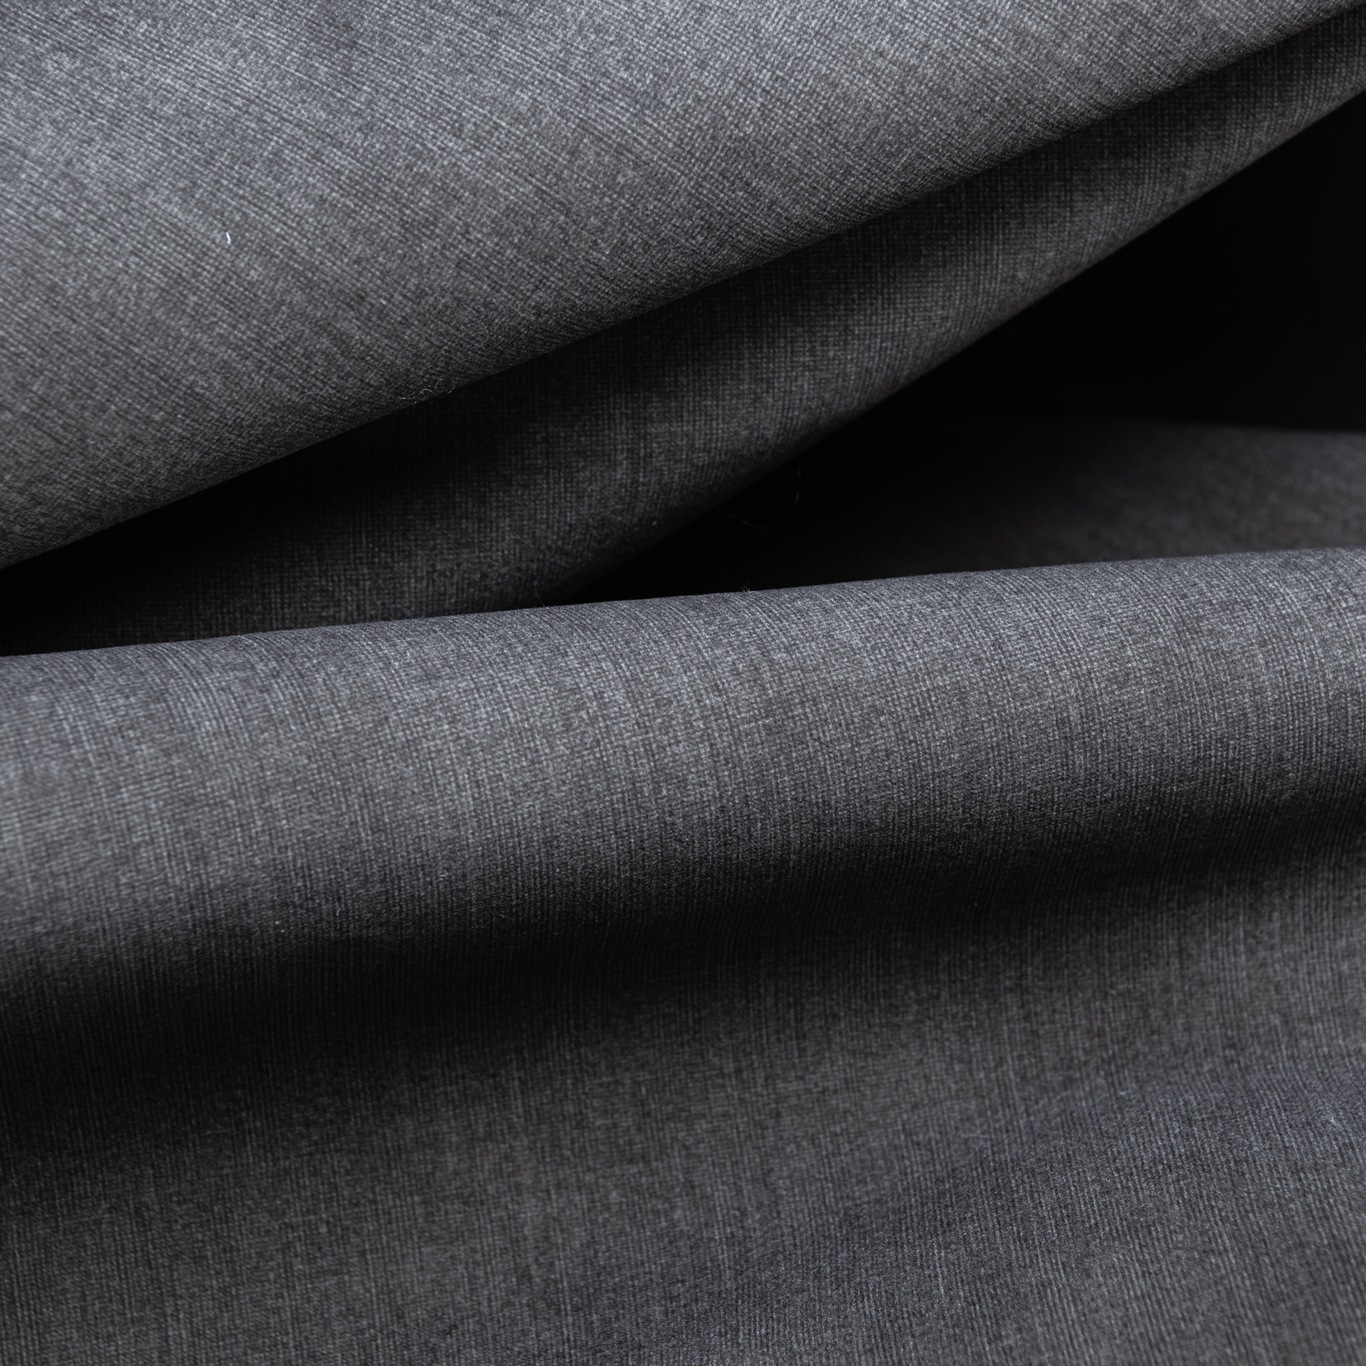 Grand Cushions 2-pack, Zinc Grey